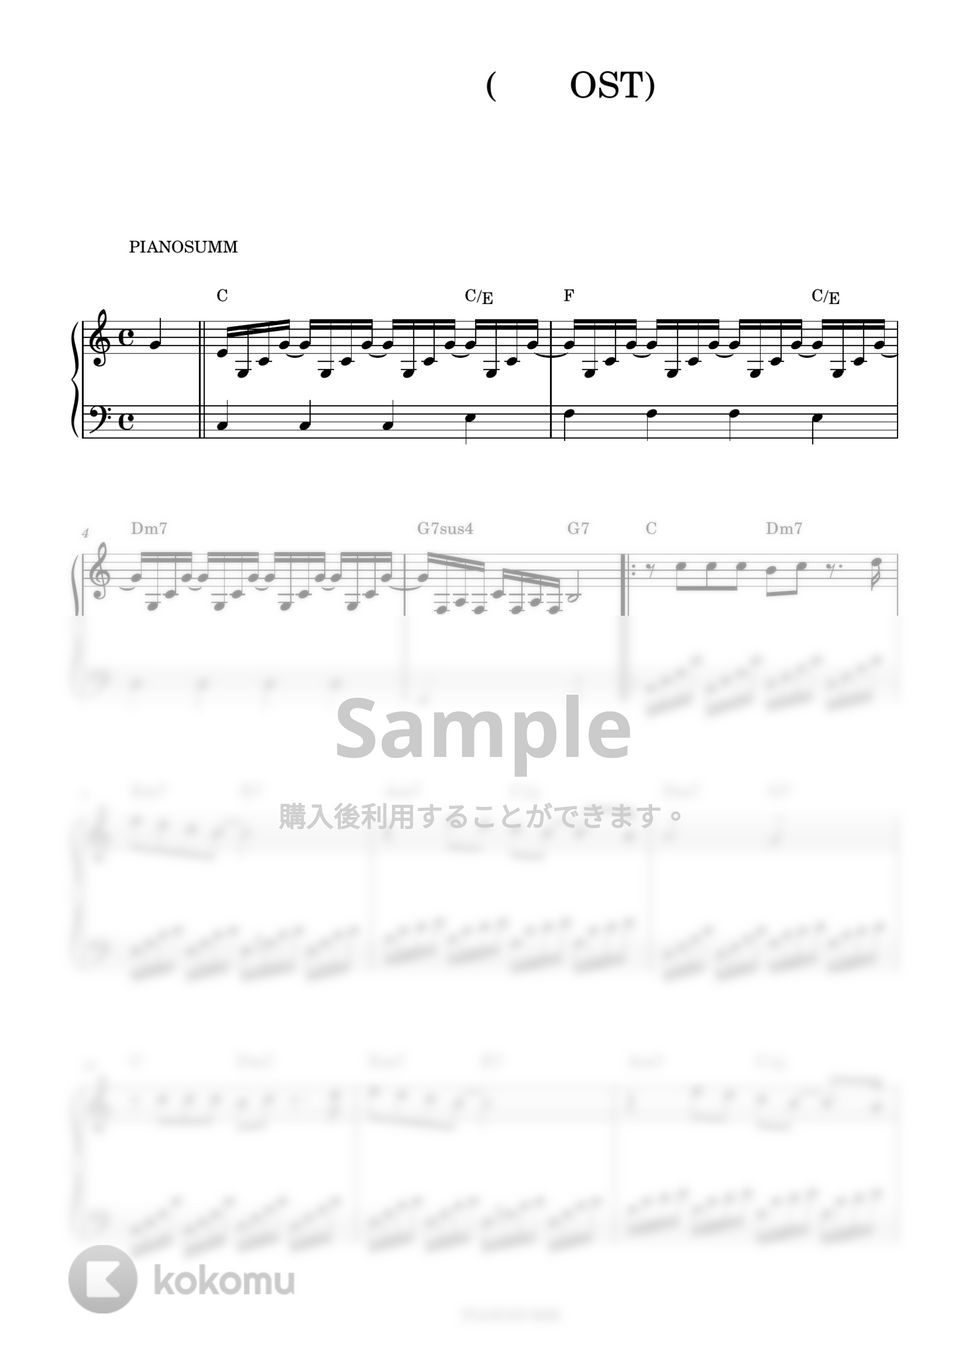 BOL4(볼빨간사춘기) - The covered up Road(가리워진 길) (Misaeng(미생) OST) by PIANOSUMM